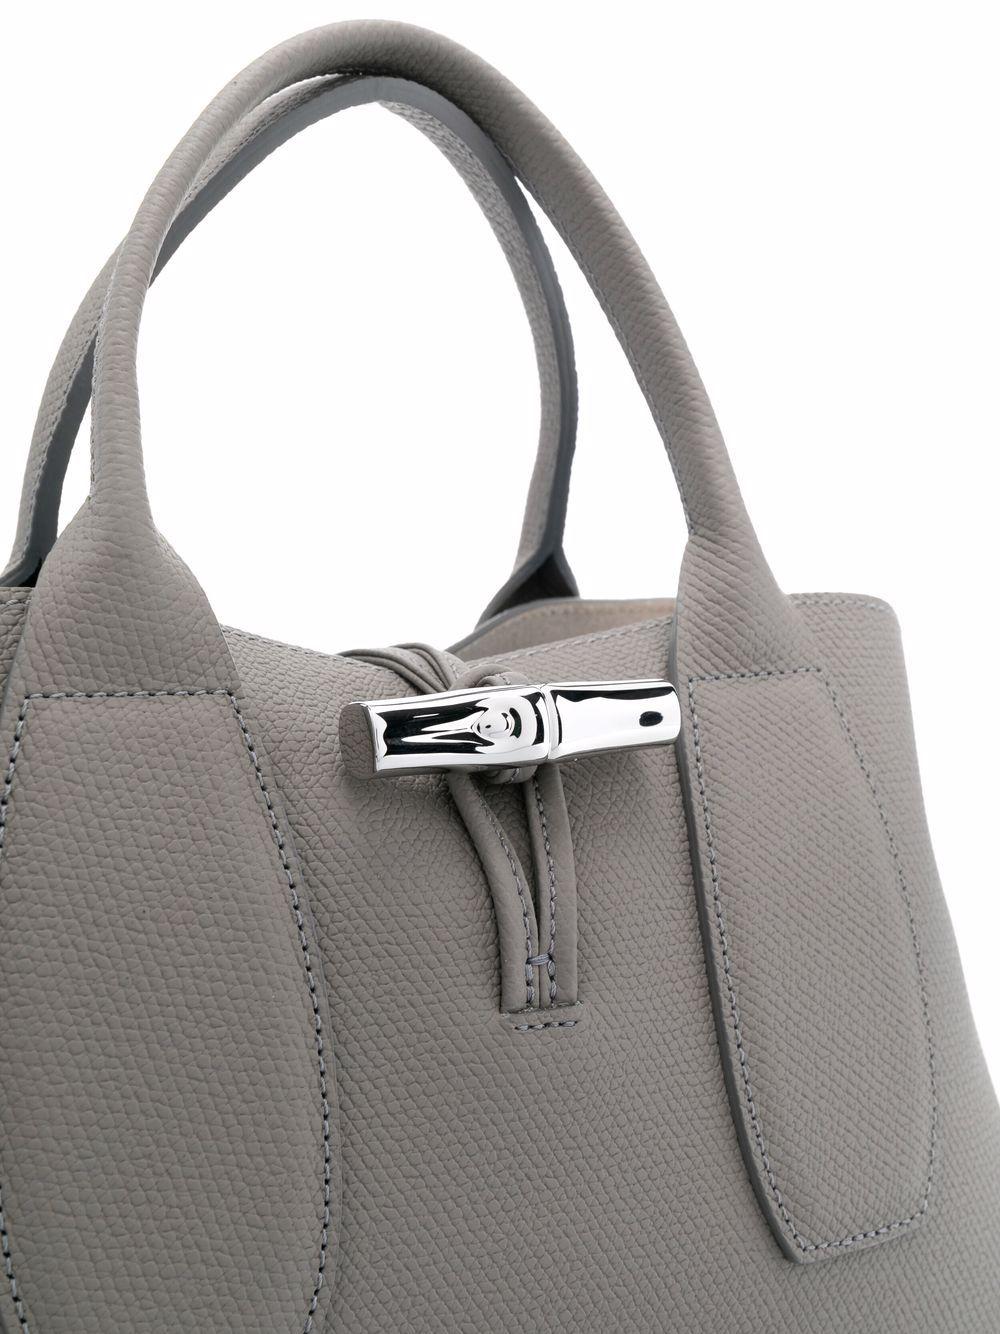  Longchamp 'Roseau' Leather Shoulder Tote Handbag, Black :  Clothing, Shoes & Jewelry